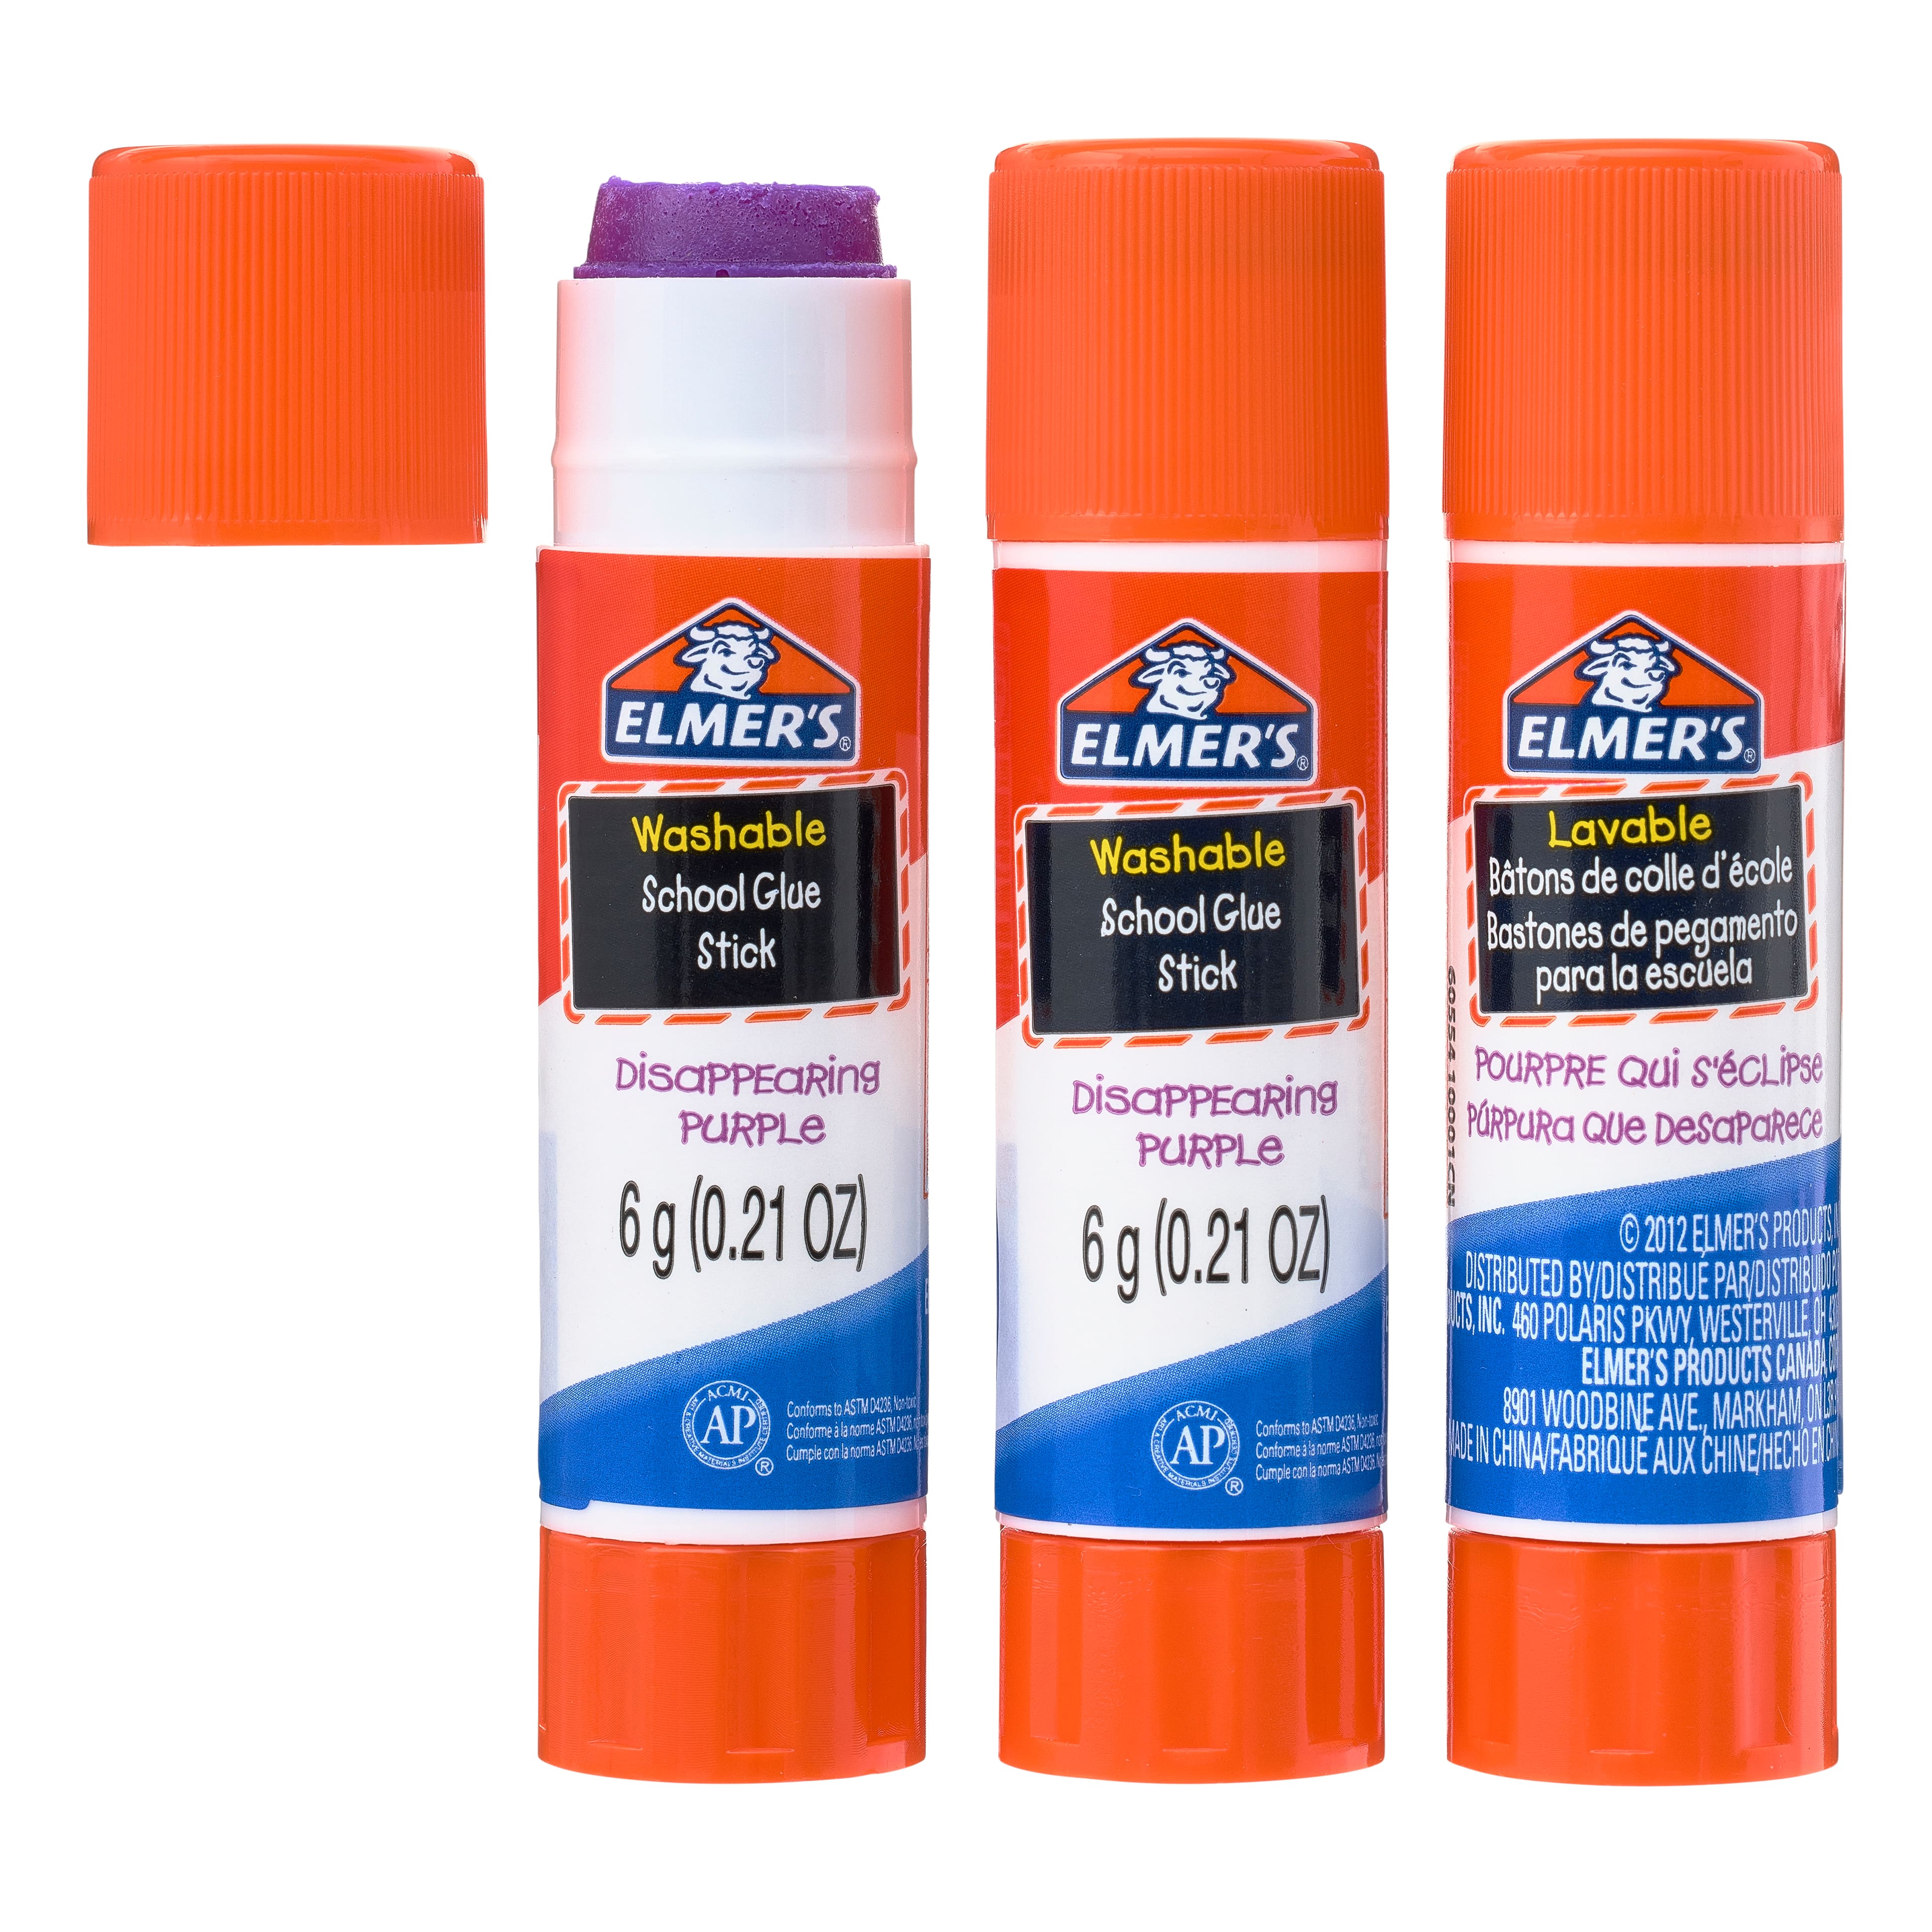 Best Buy: Elmer's Disappearing School Glue Sticks (3-Pack) Purple E520